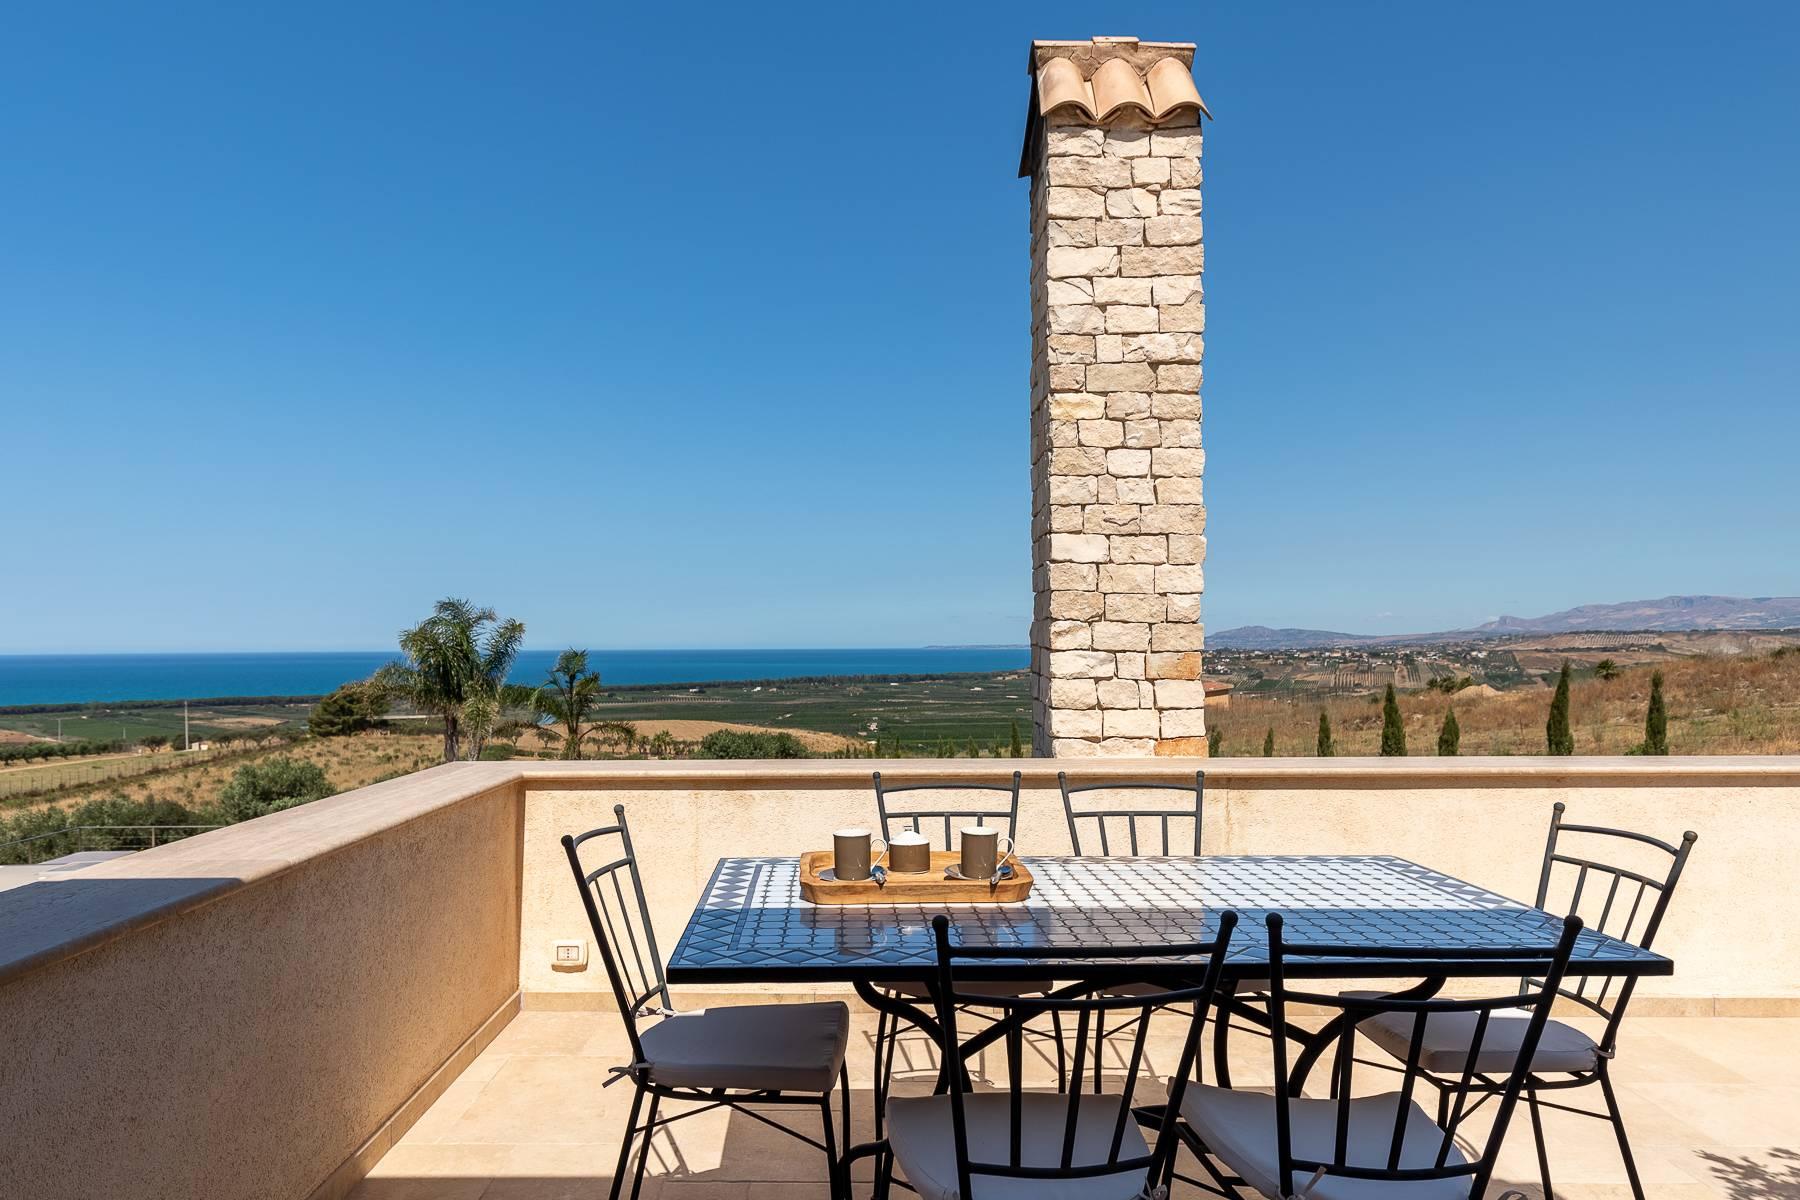 Exclusive villa with stunning views on the Mediterranean sea - 45